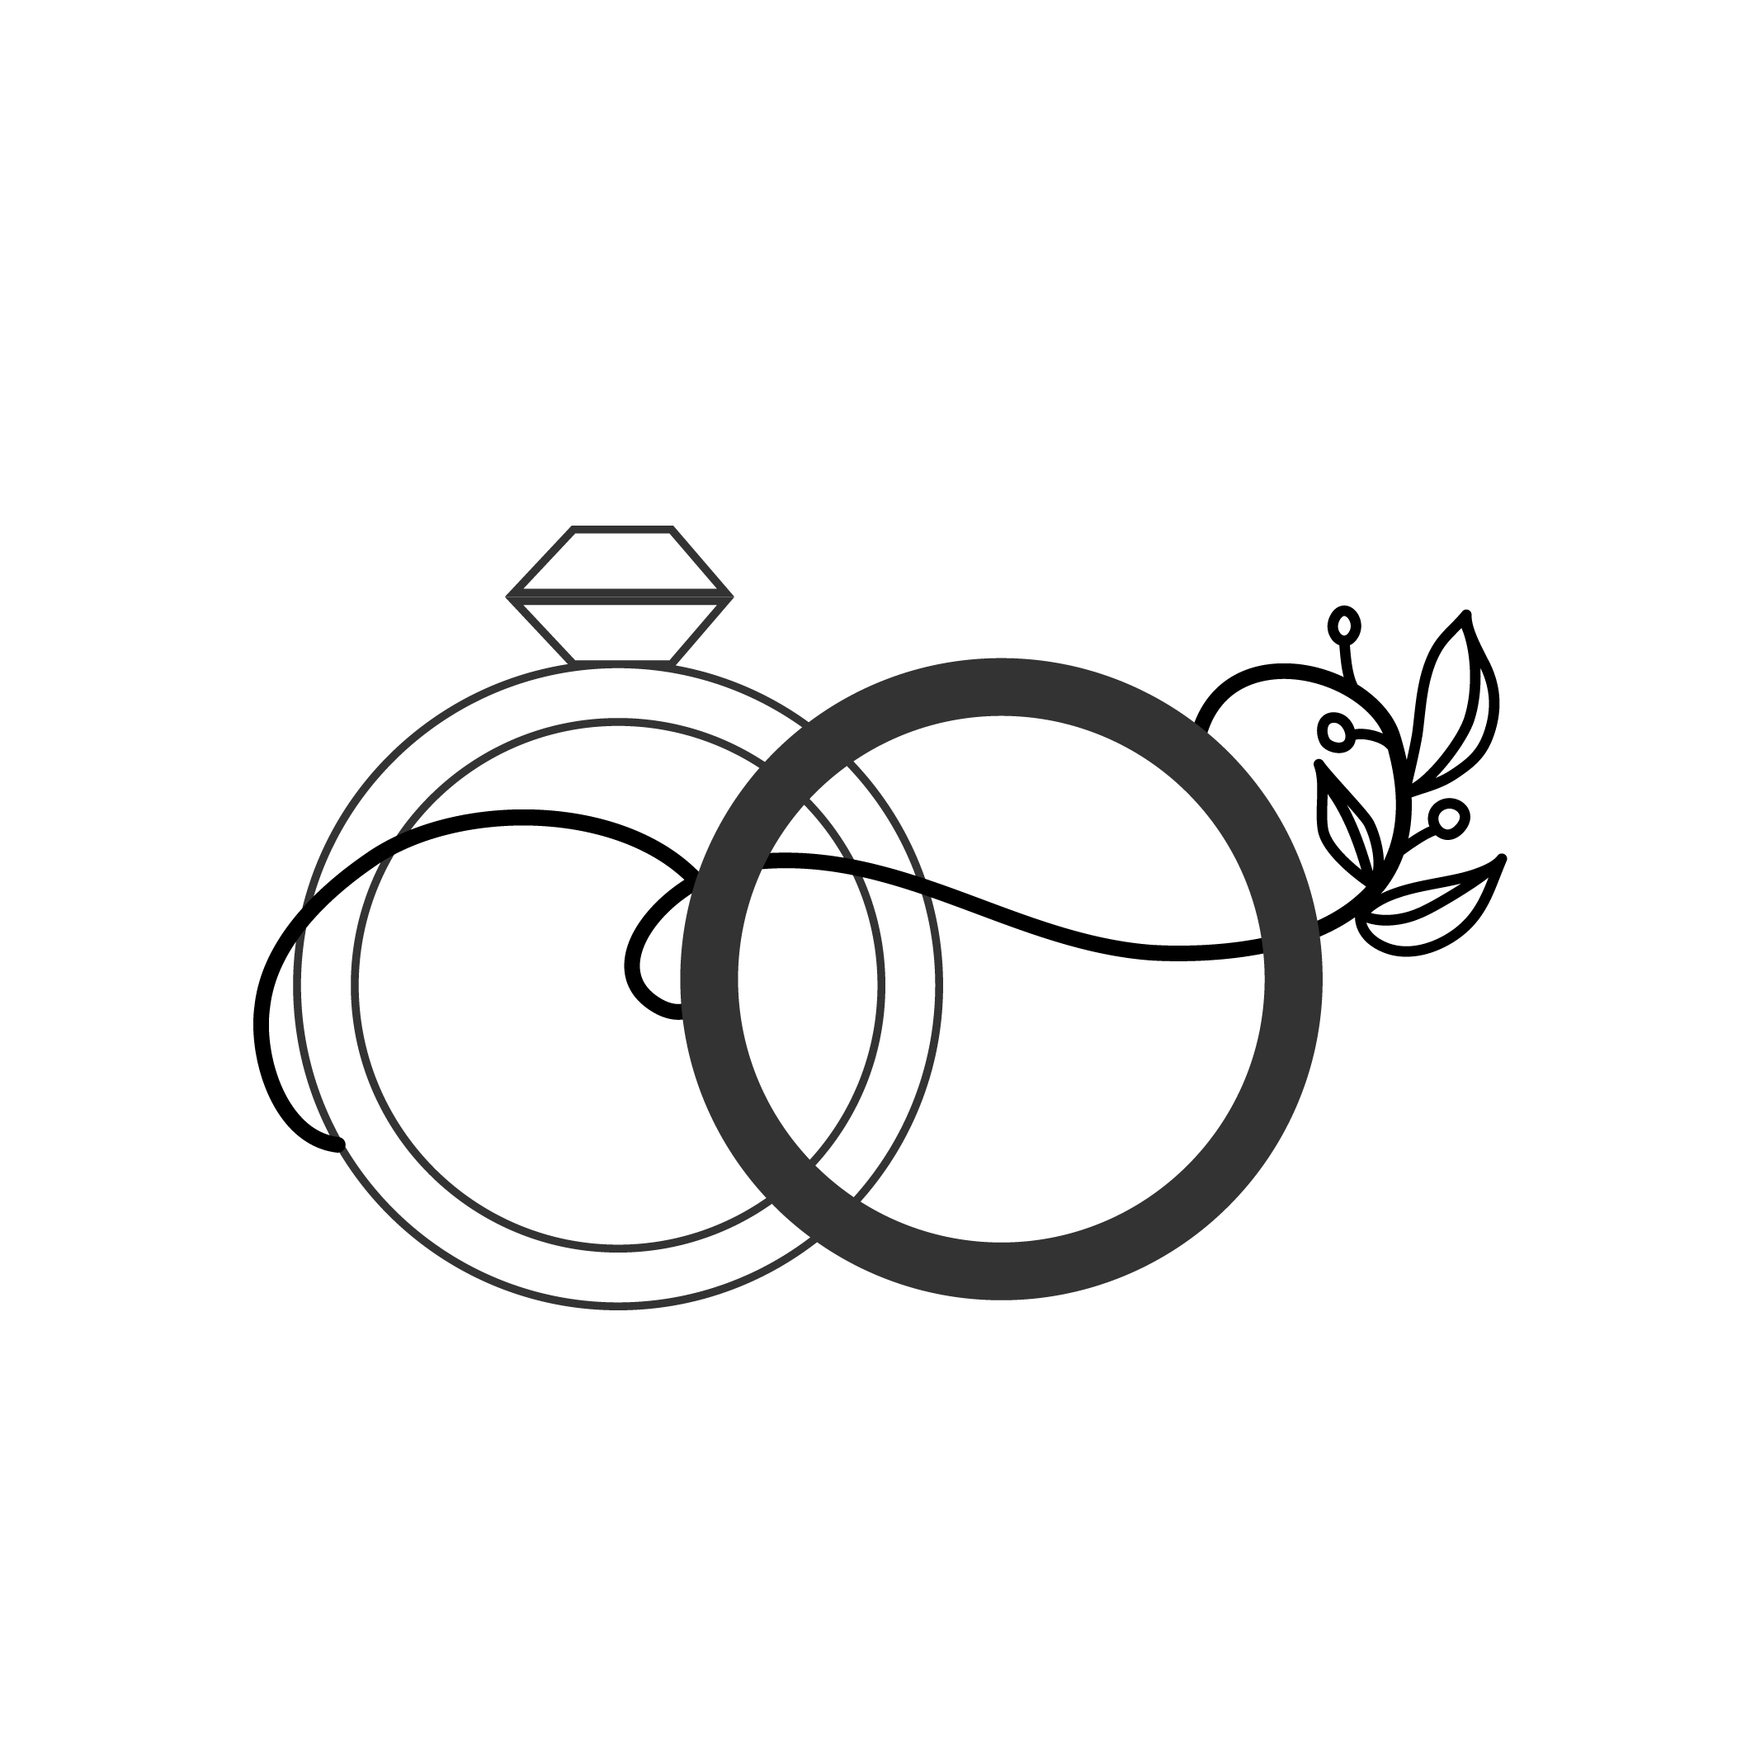 Decorative Wedding Silhouette in Illustrator, EPS, SVG, JPG, PNG